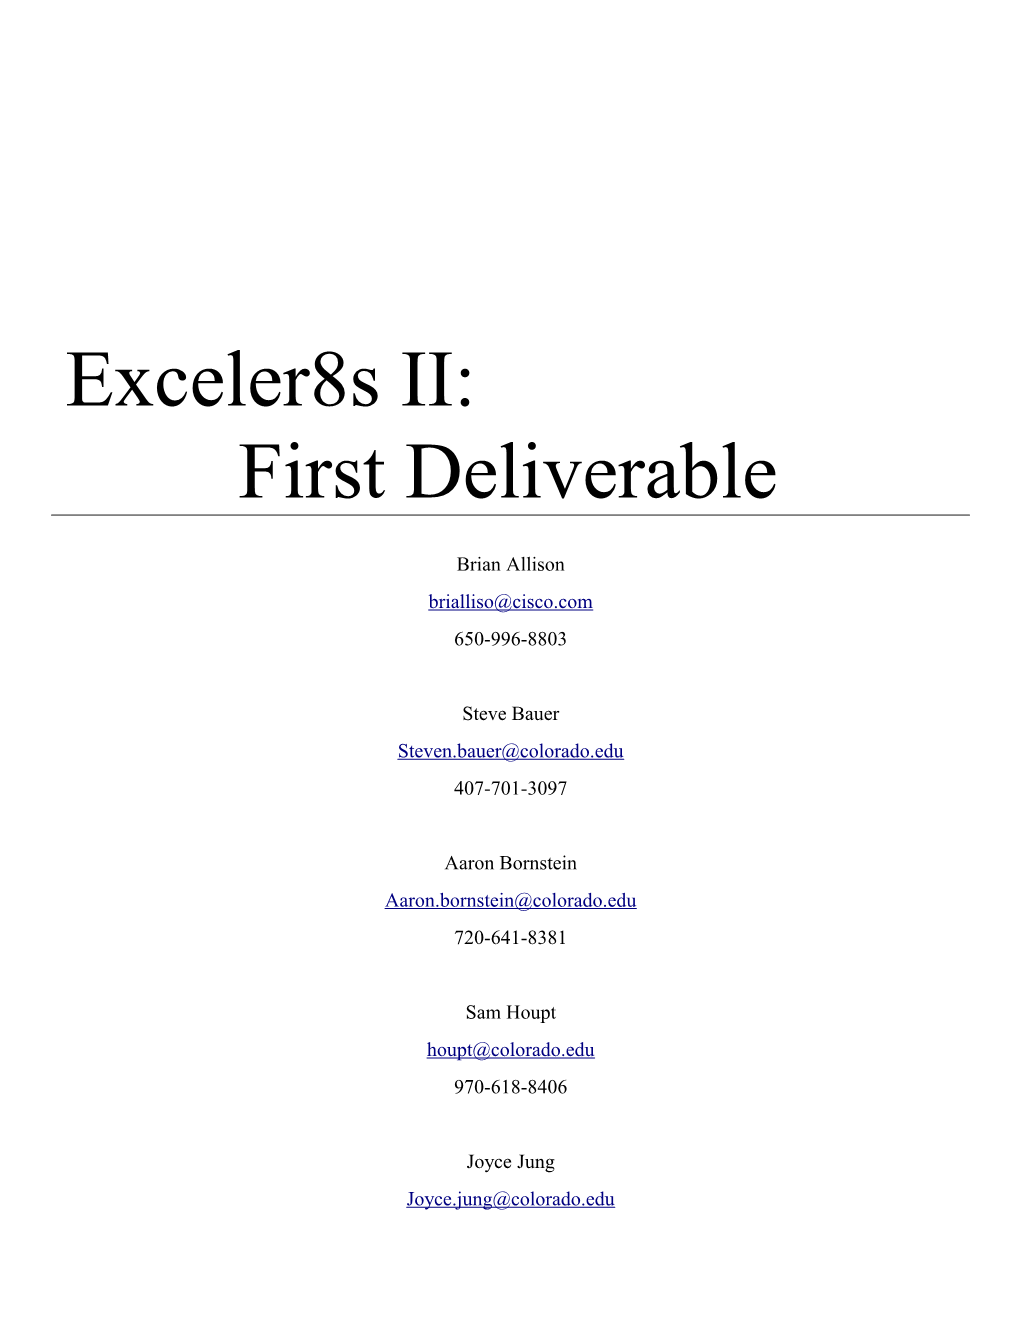 Exceler8s II: Project Charter